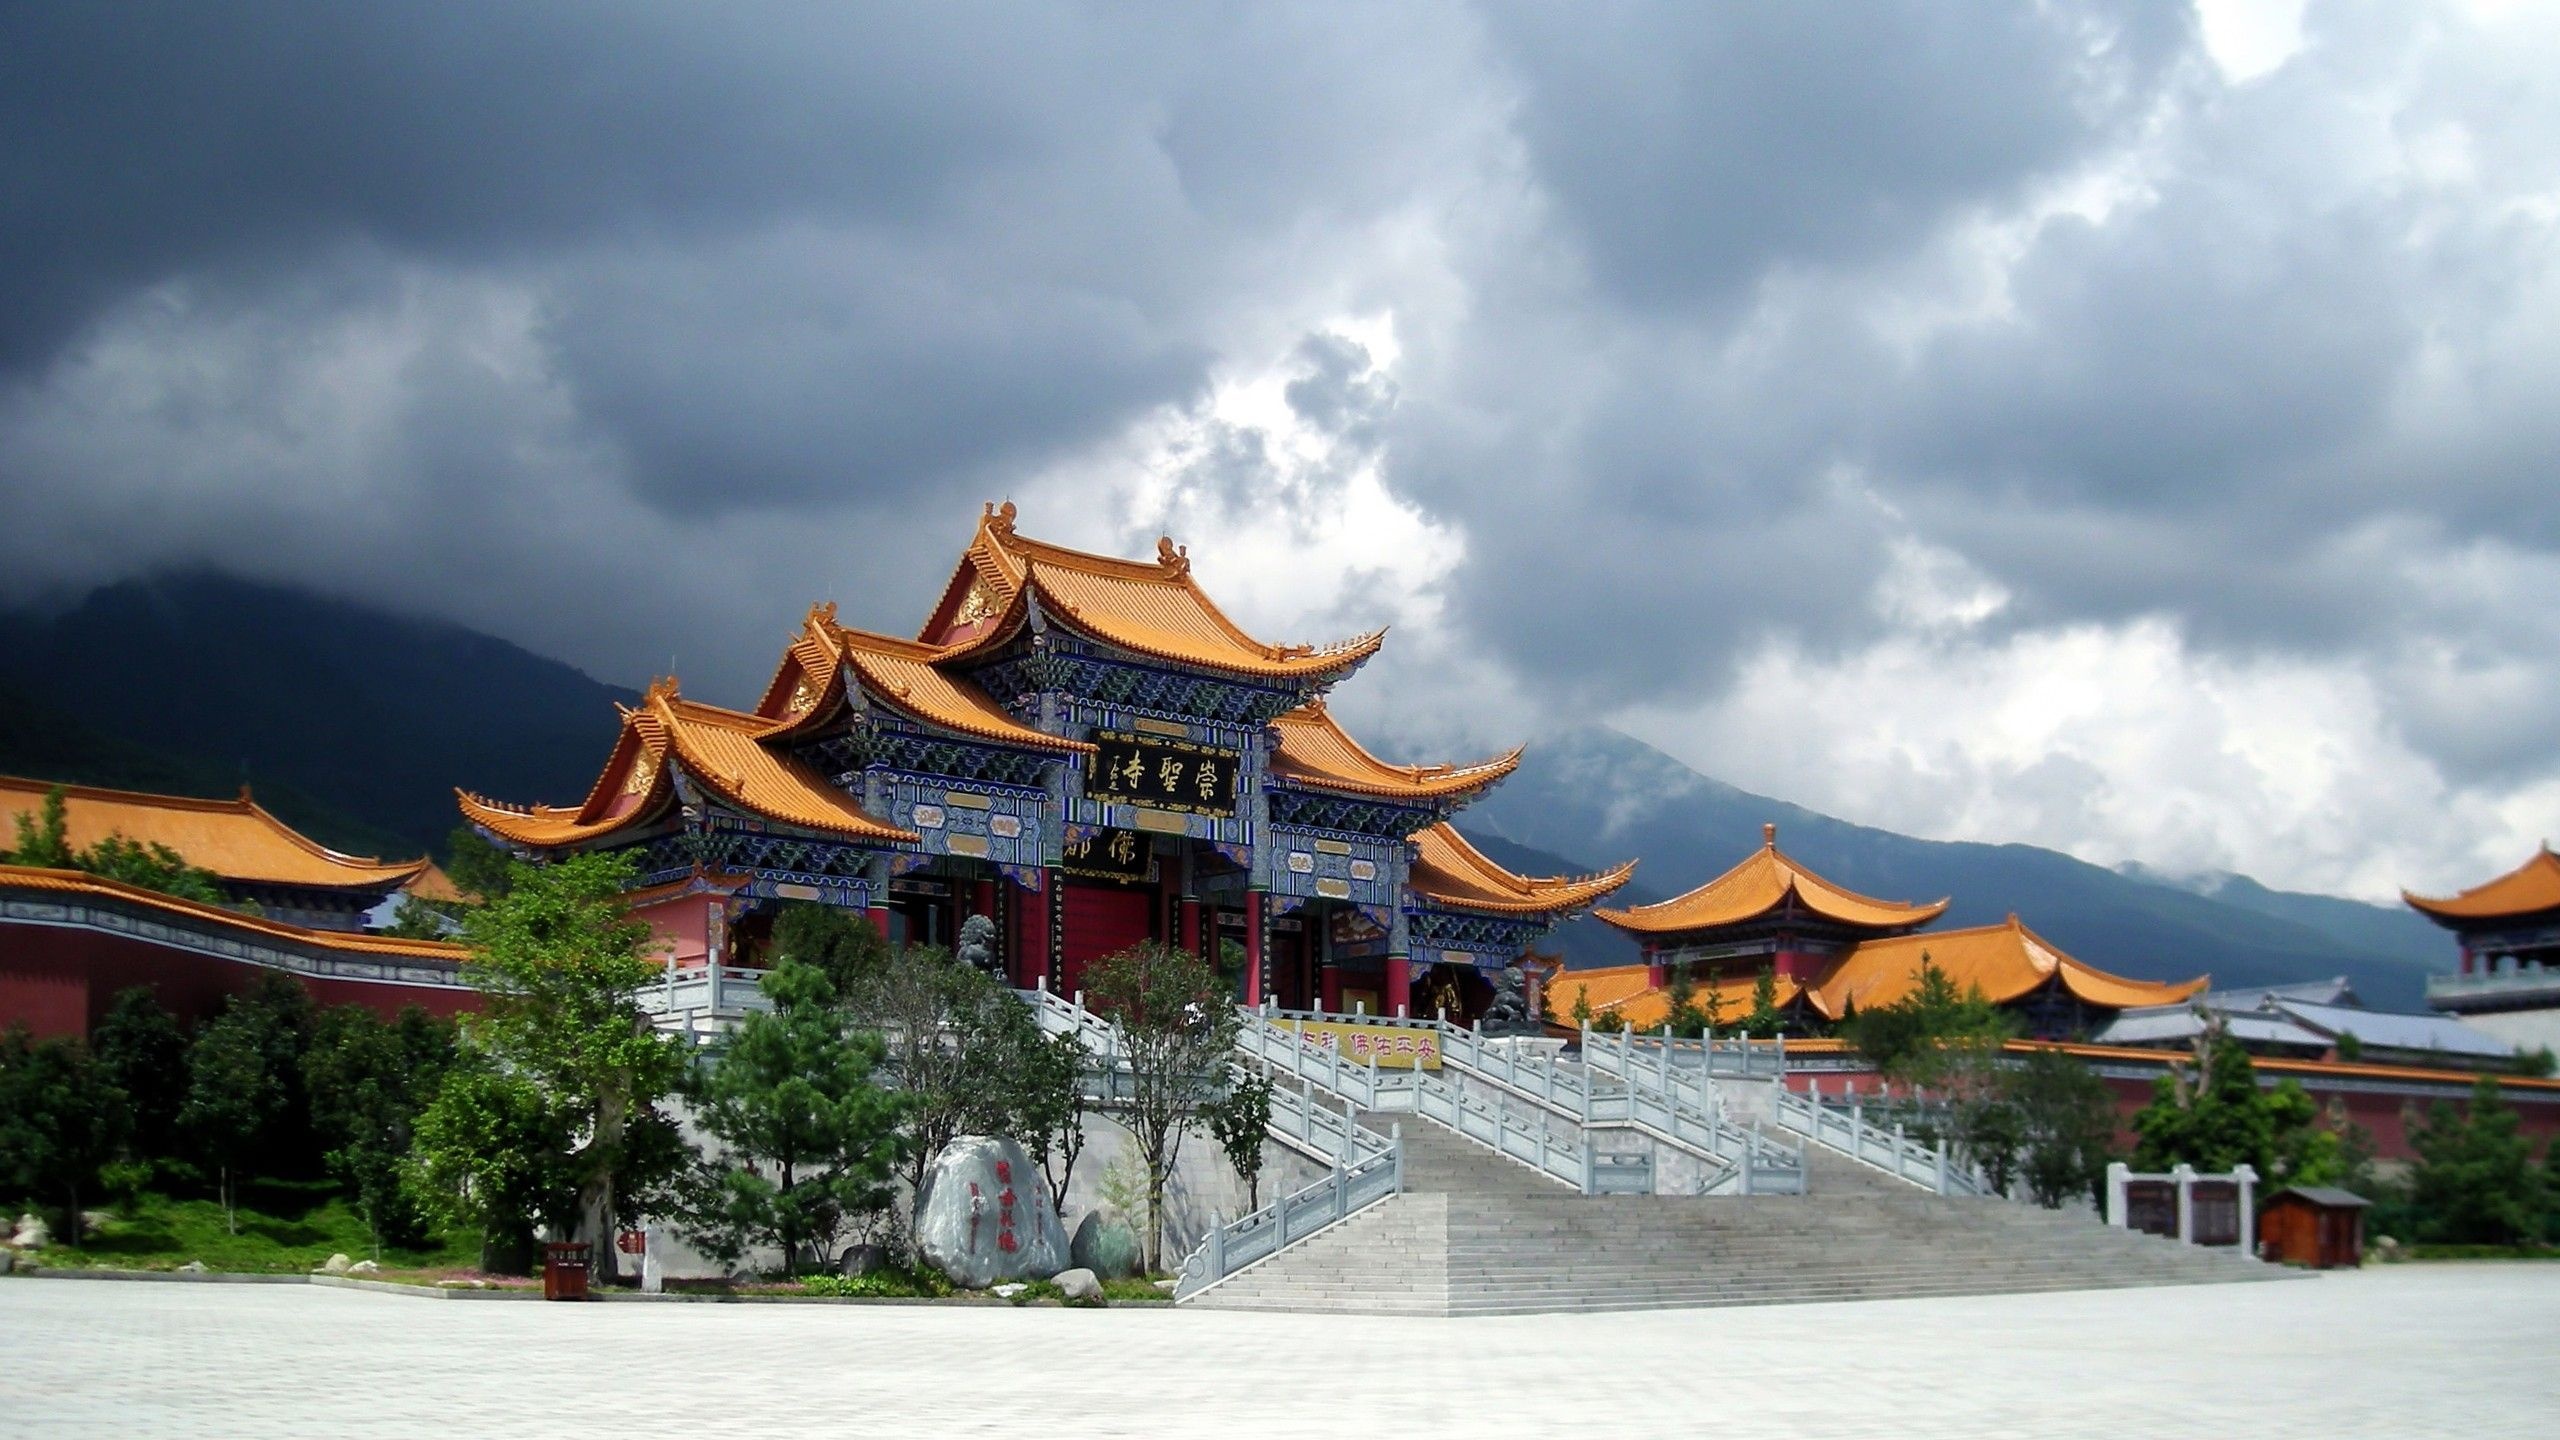 Chongsheng Temple Asian Architecture